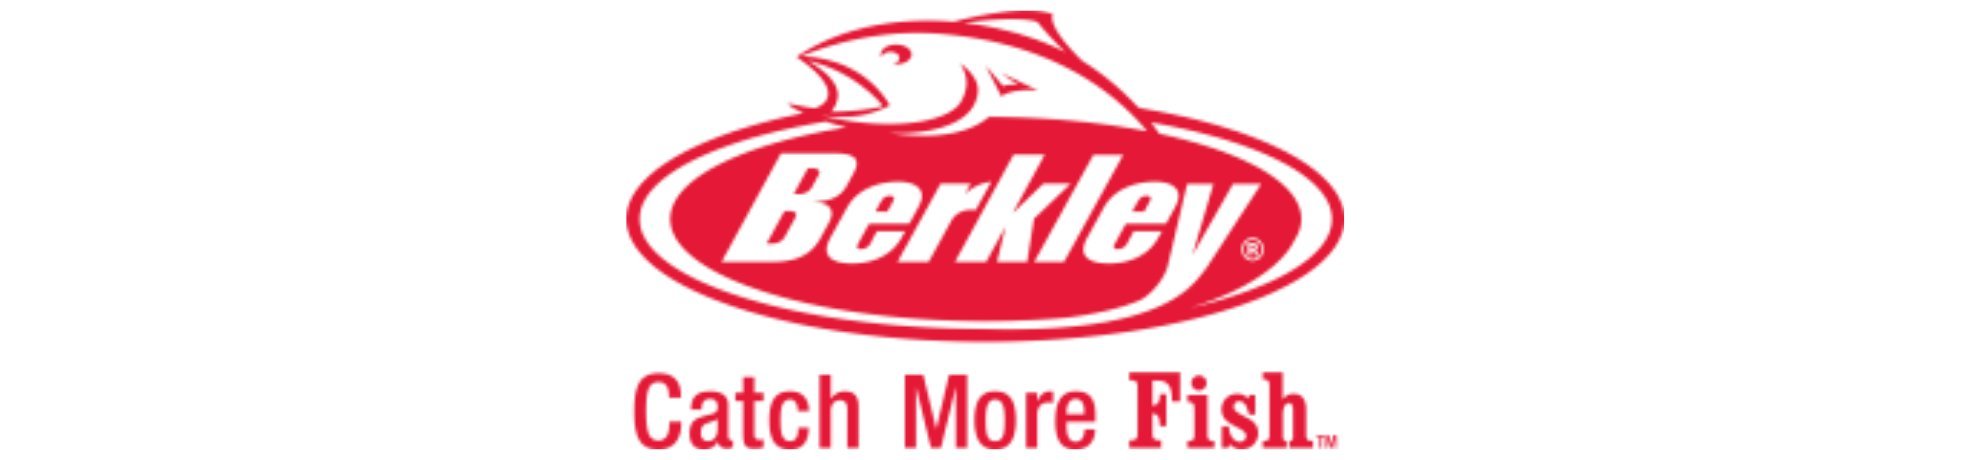 Berkley - fishermanshub